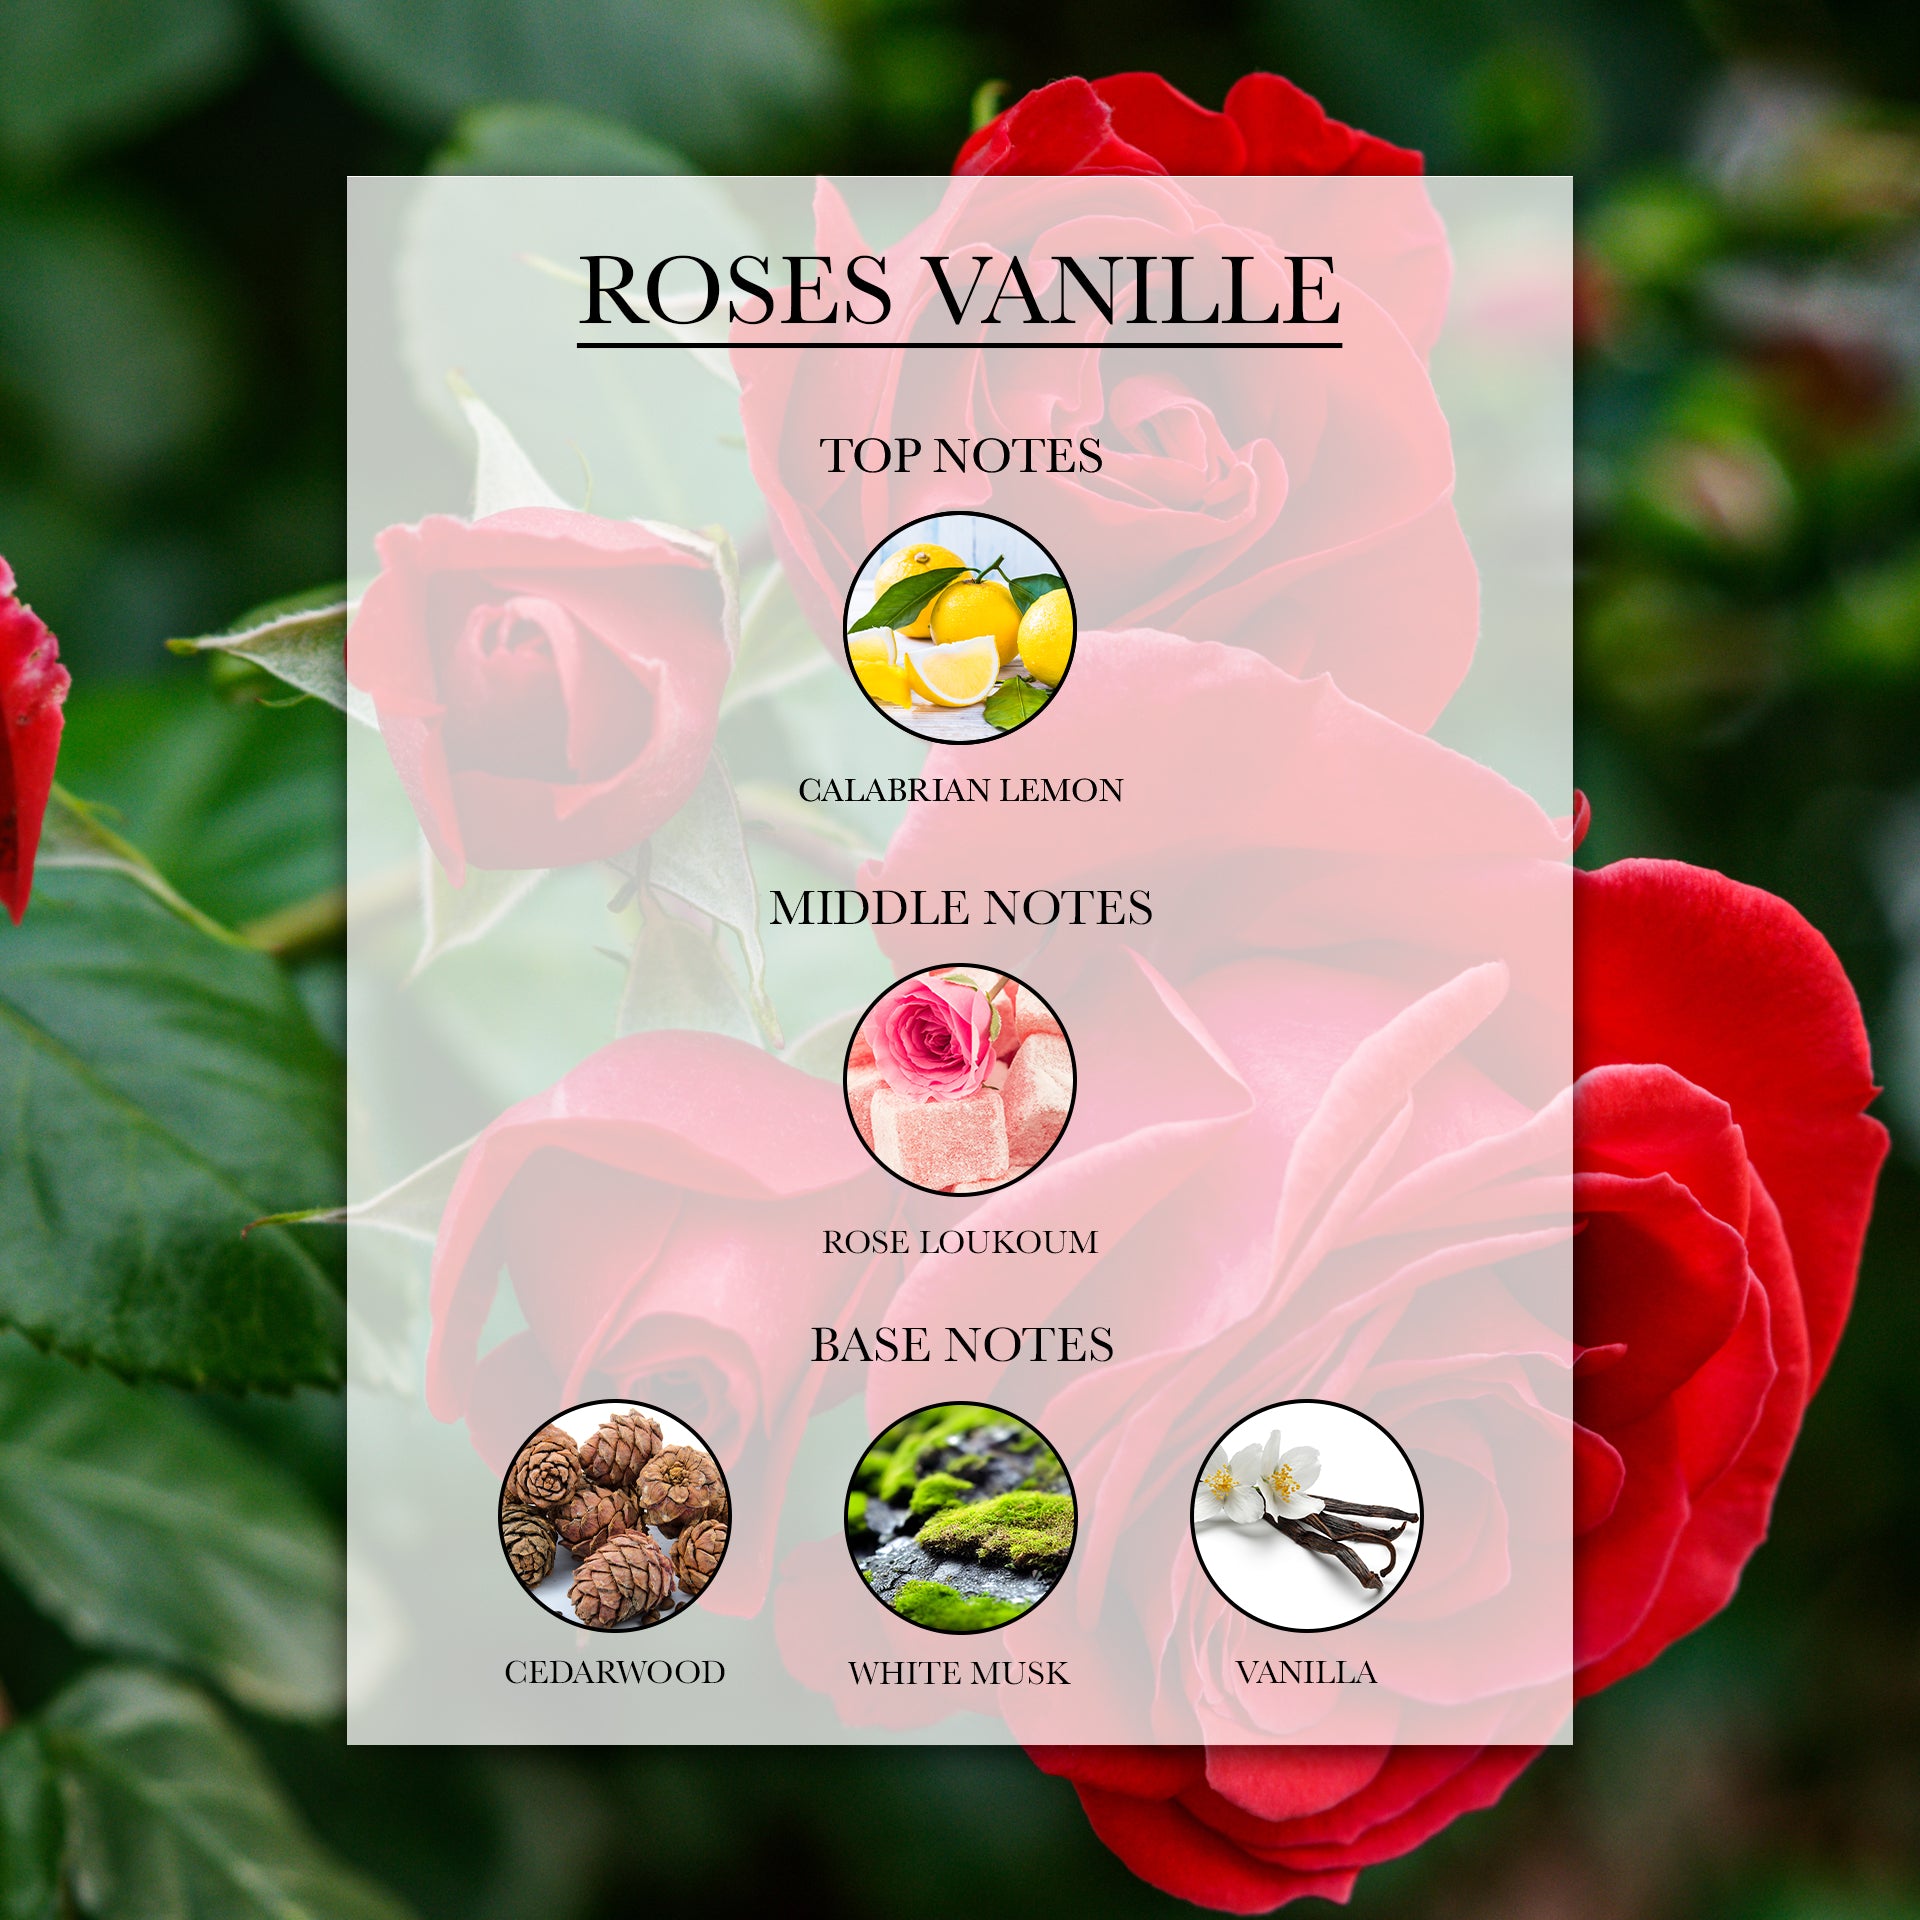 Roses Vanille